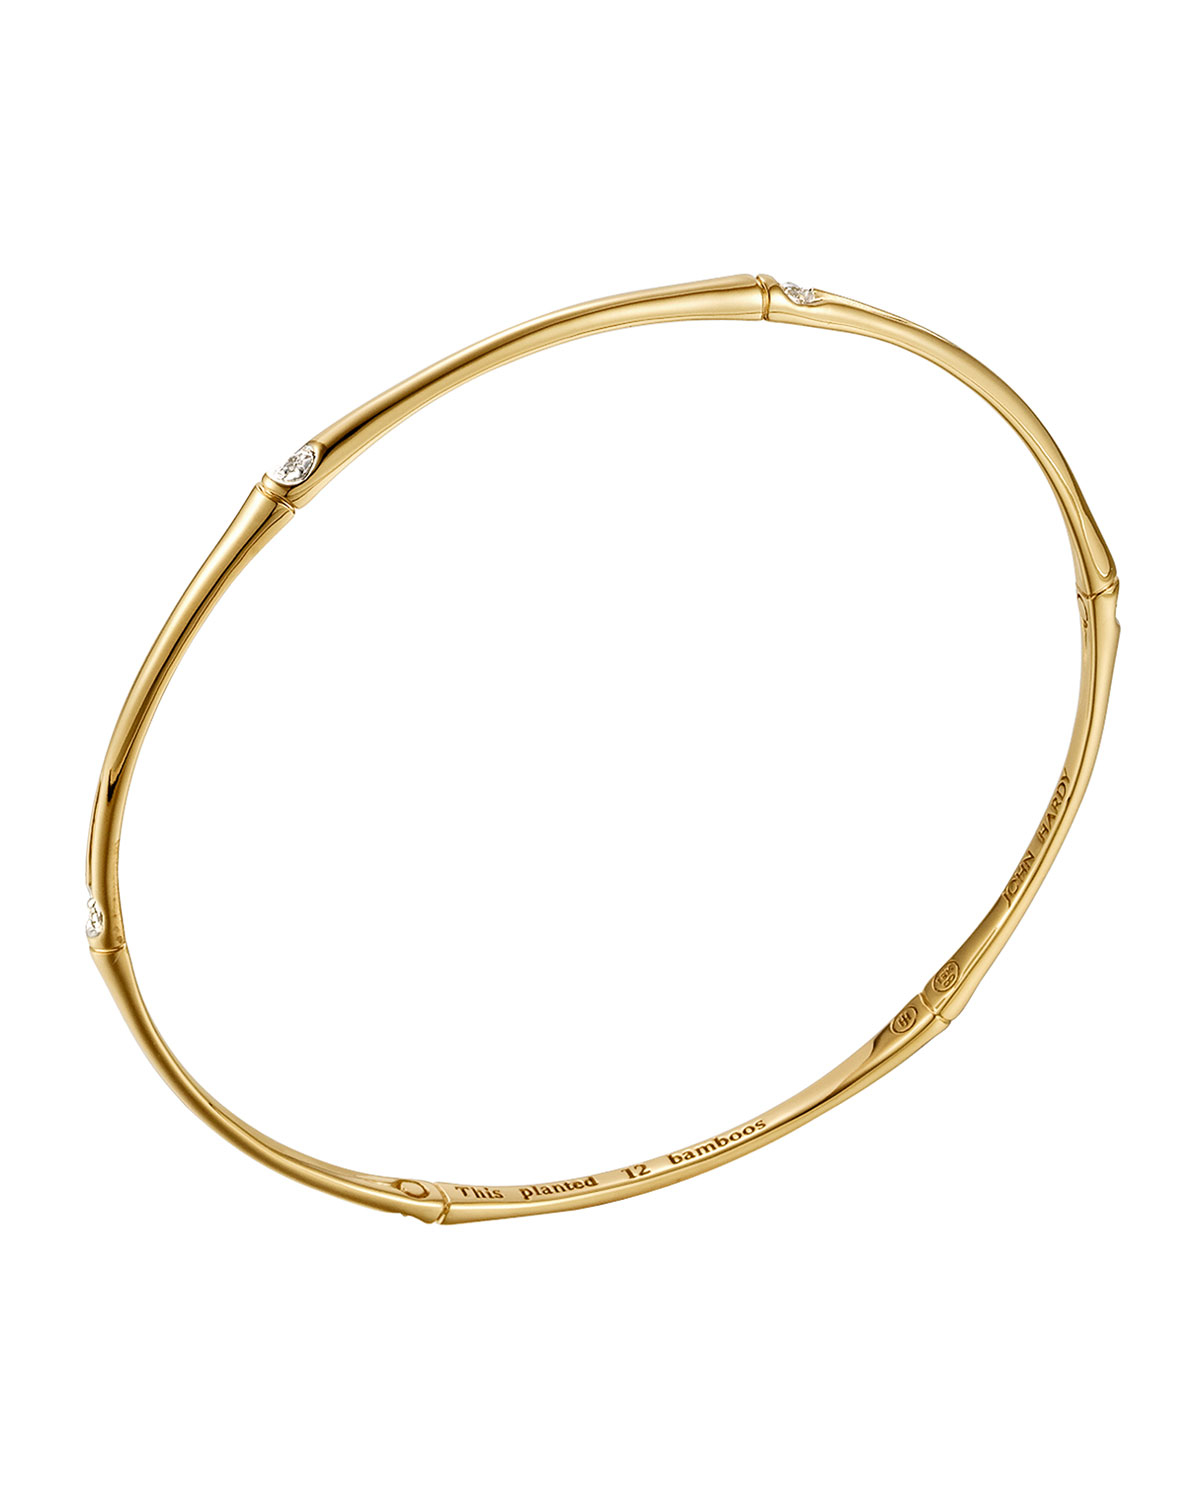 Lyst - John hardy Slim Bamboo 18k Gold & Diamond Bangle Bracelet in ...